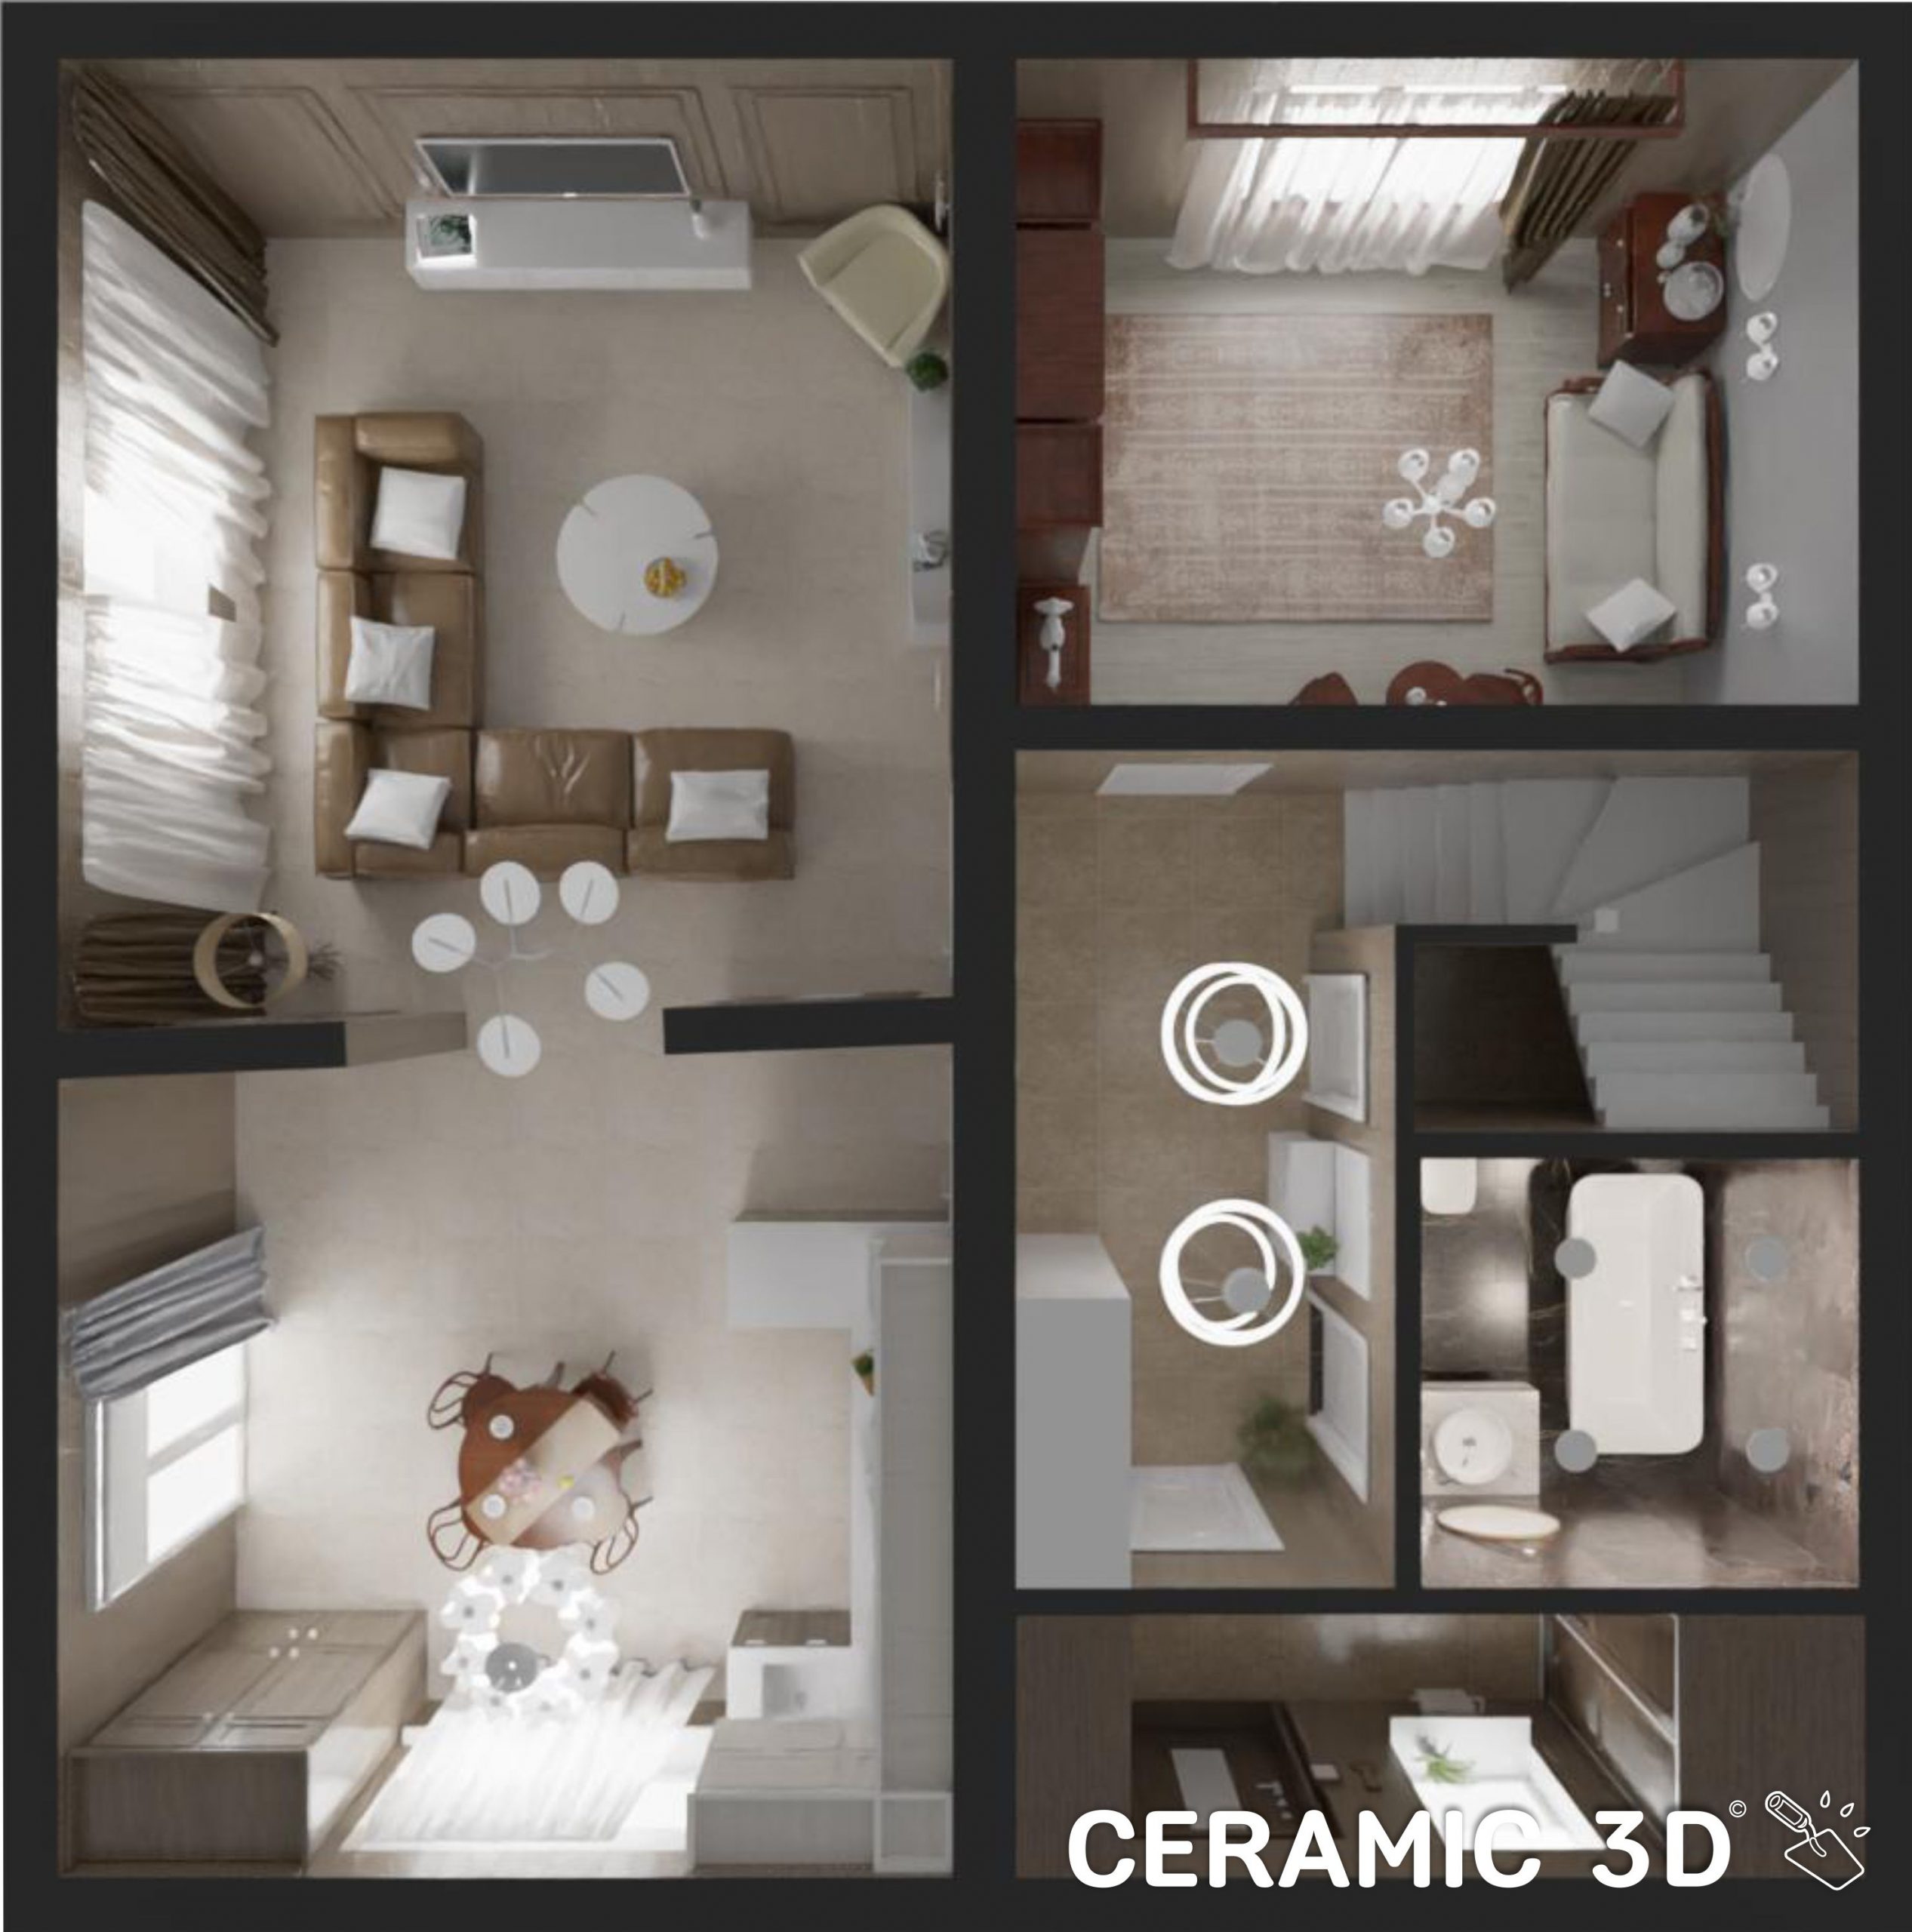 Ceramic 3D company has released a new Multiroom module